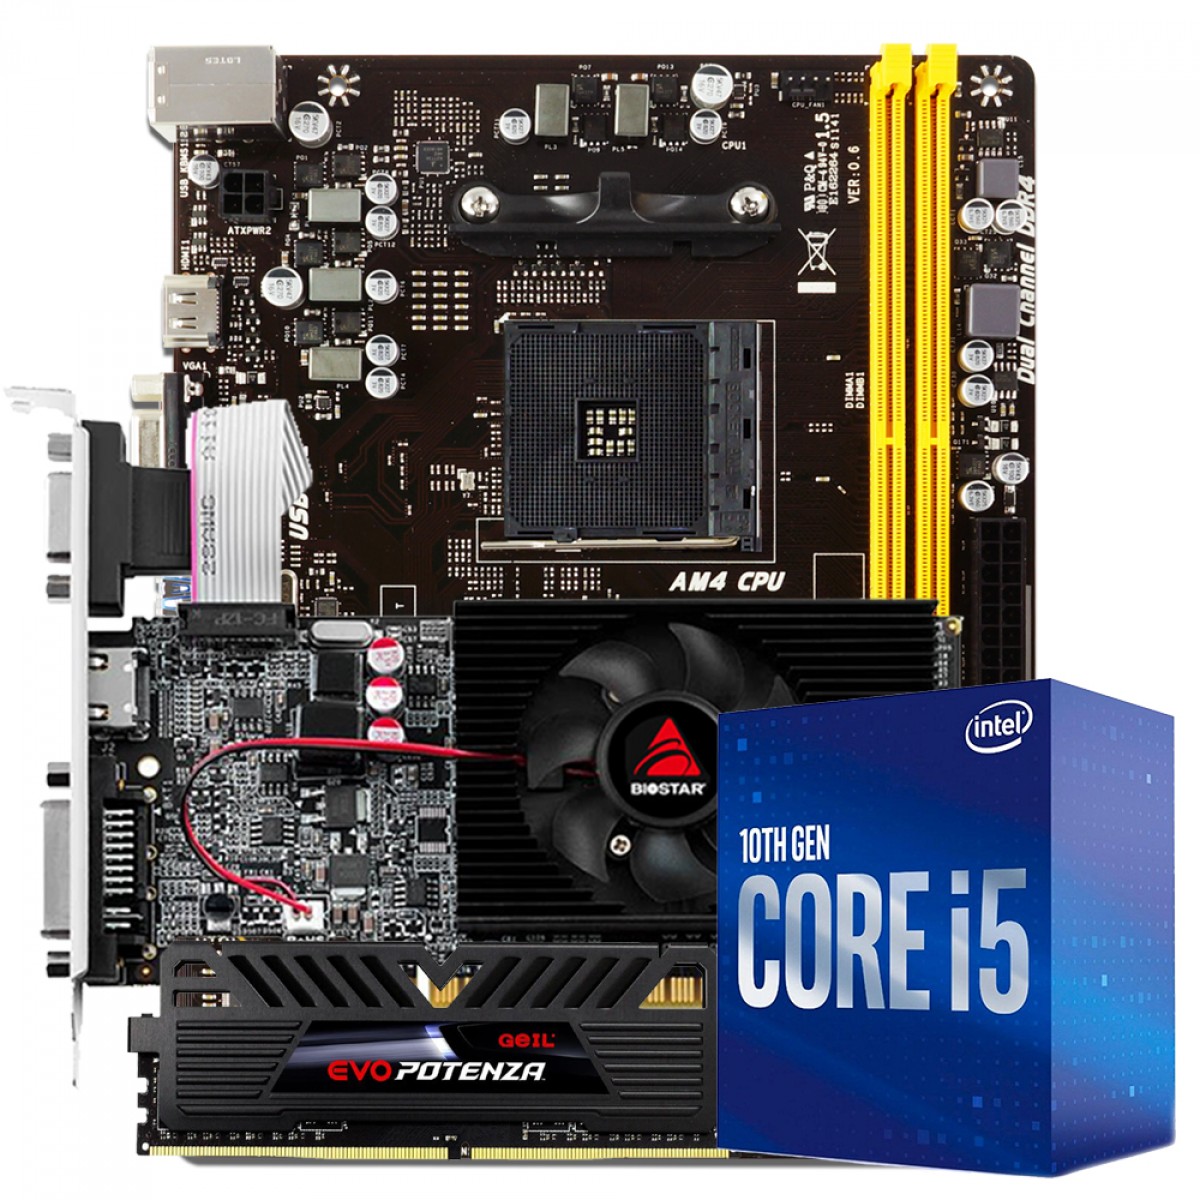 Kit Upgrade Biostar GeForce GT 710 + Intel Core i5 10400F + Biostar A320MH + Geil Evo Potenza, 8GB 3000MHz